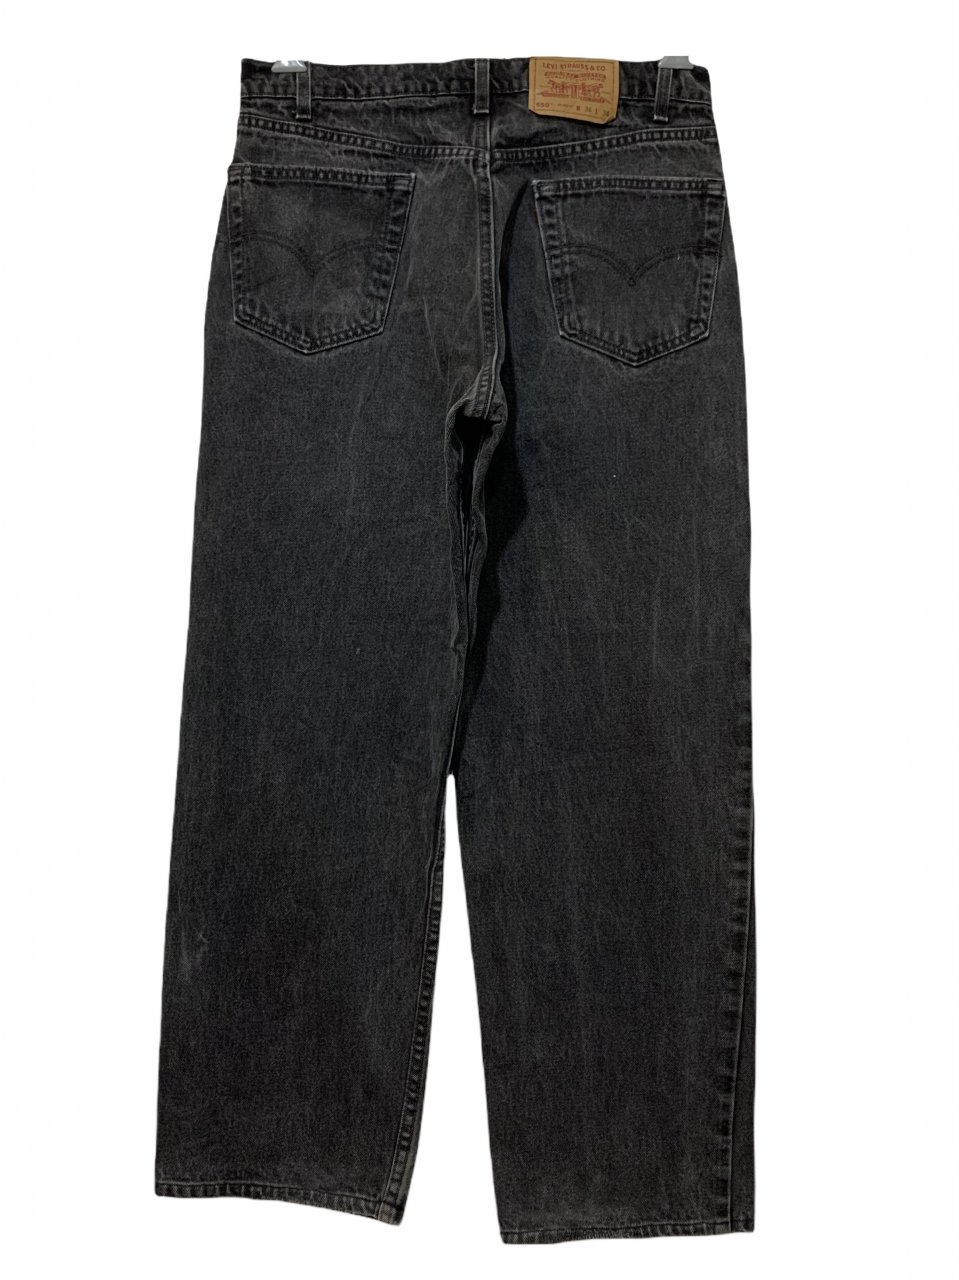 USA製 98年製 Levi's 550 Black Denim Pants 黒 W35×L28 90s